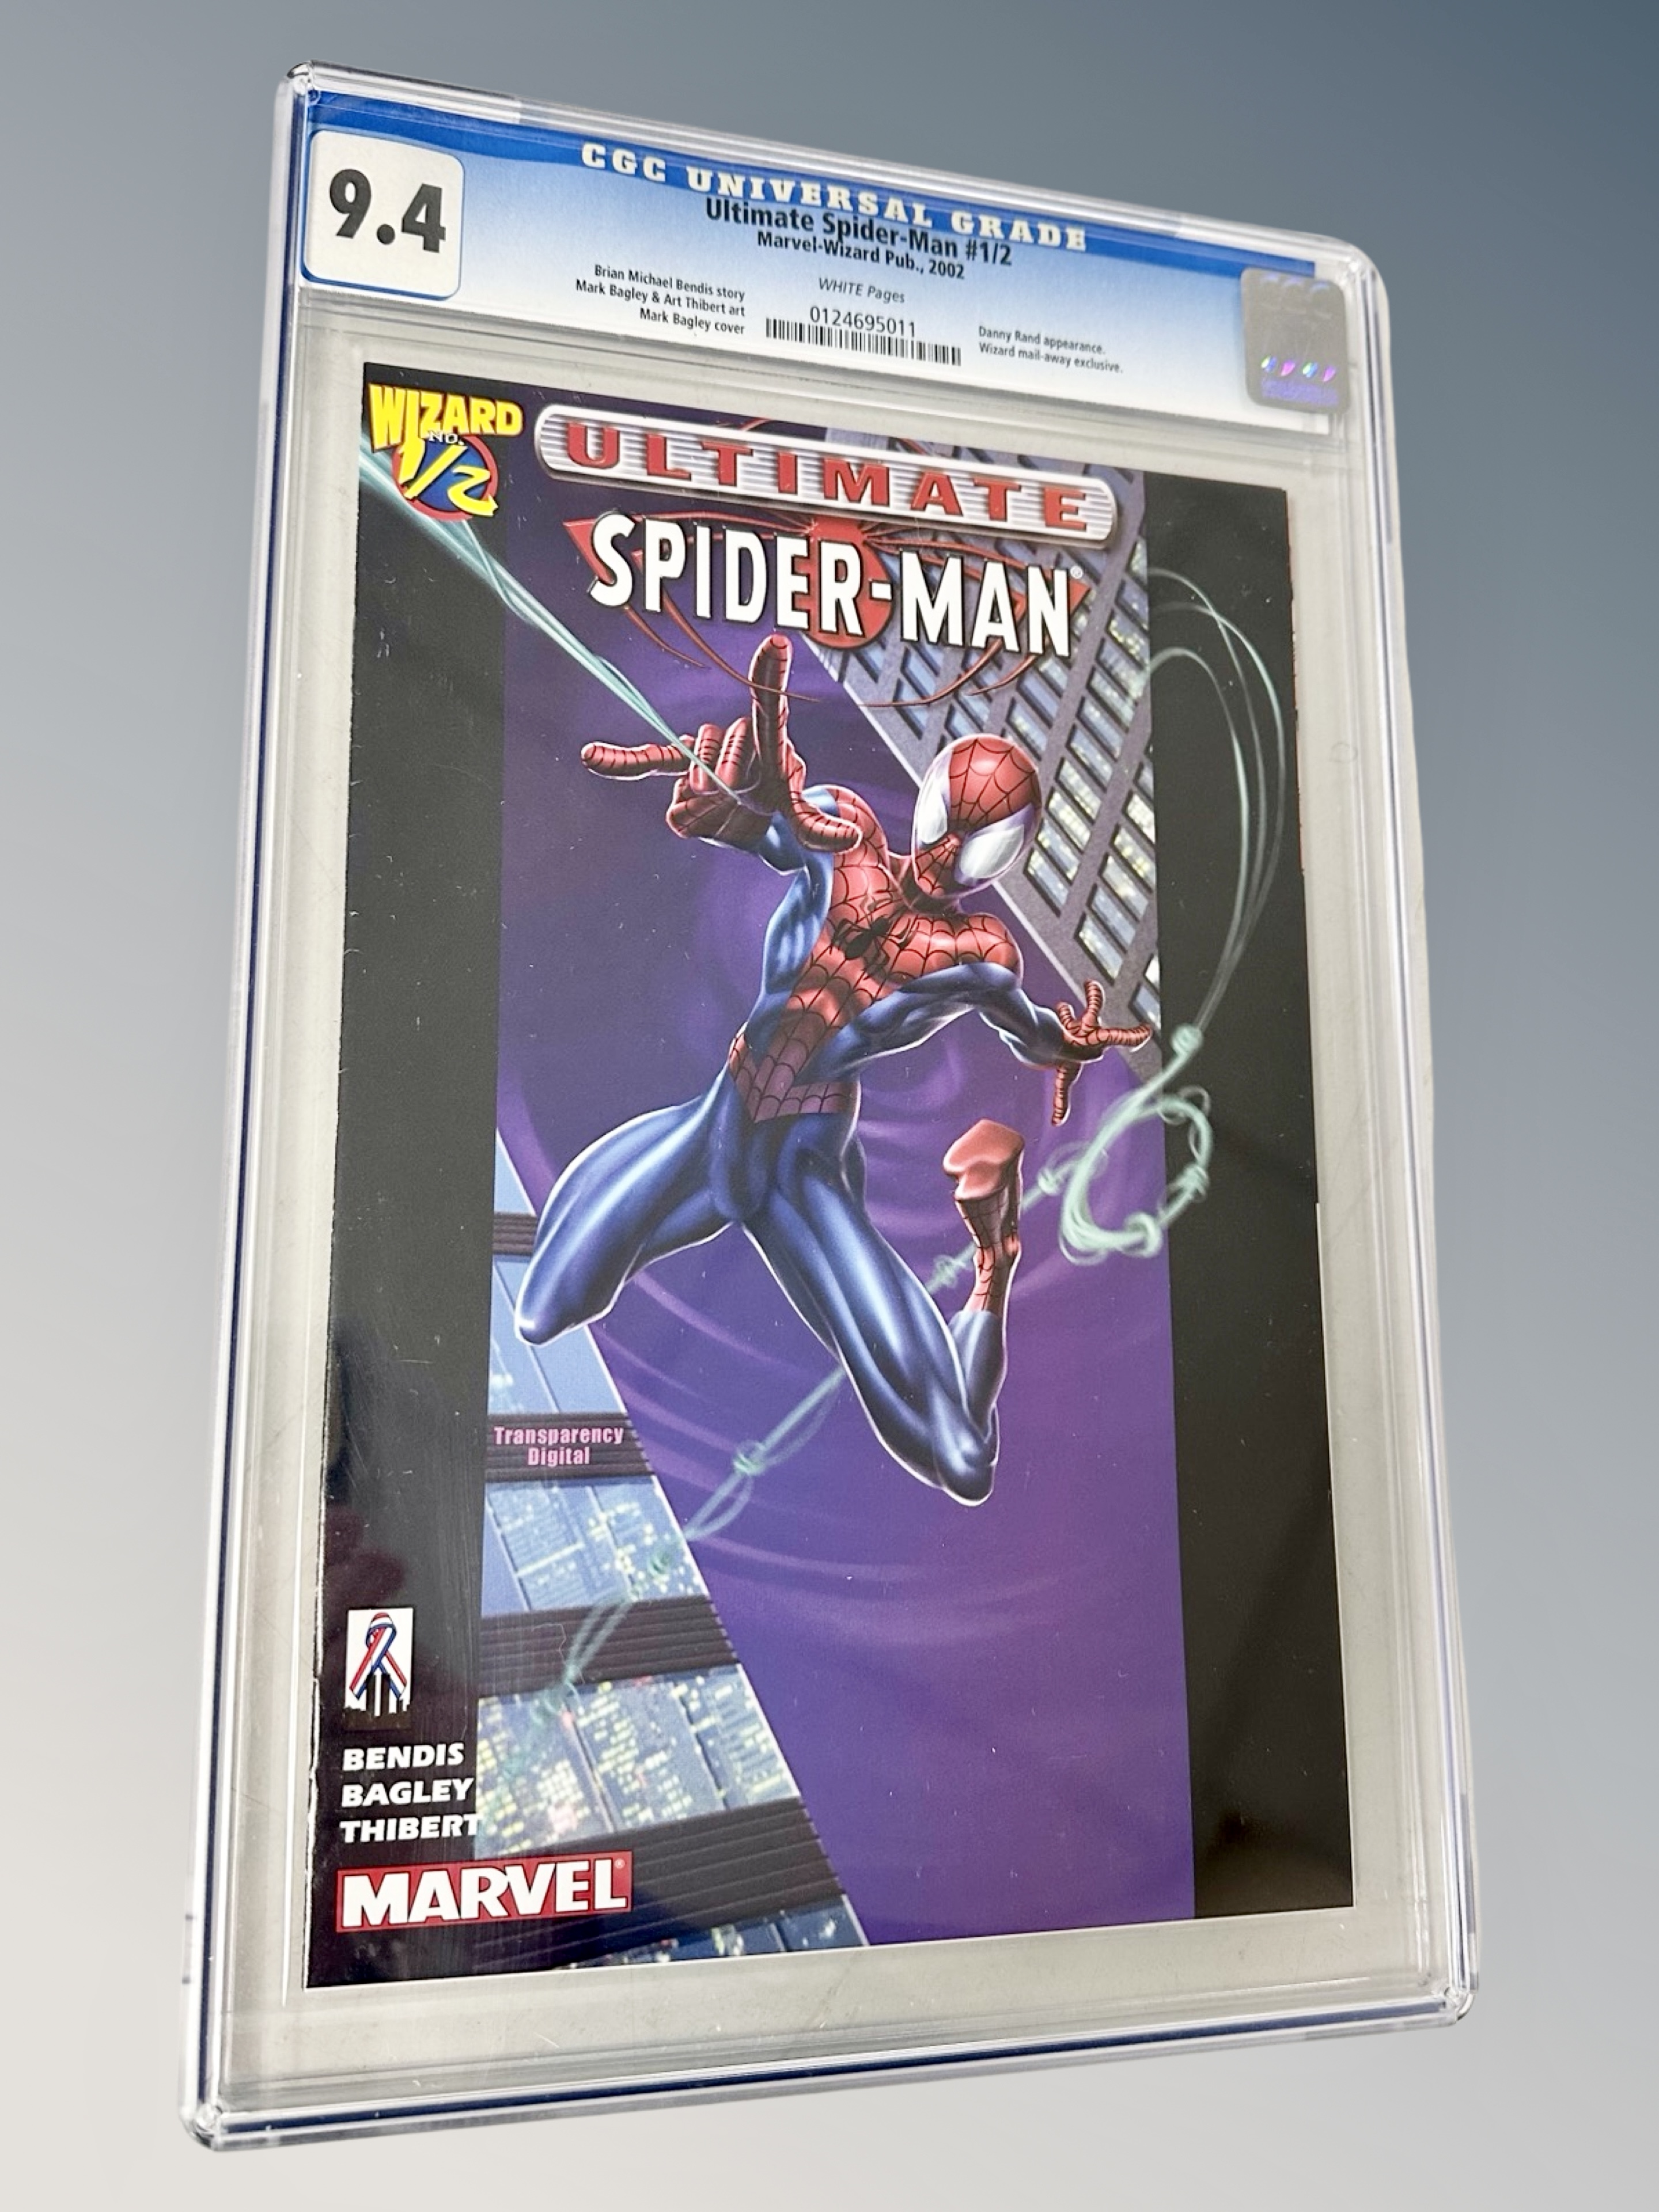 Marvel Comics : Ultimate Spider-Man issue 1/2, CGC Universal Grade 9.